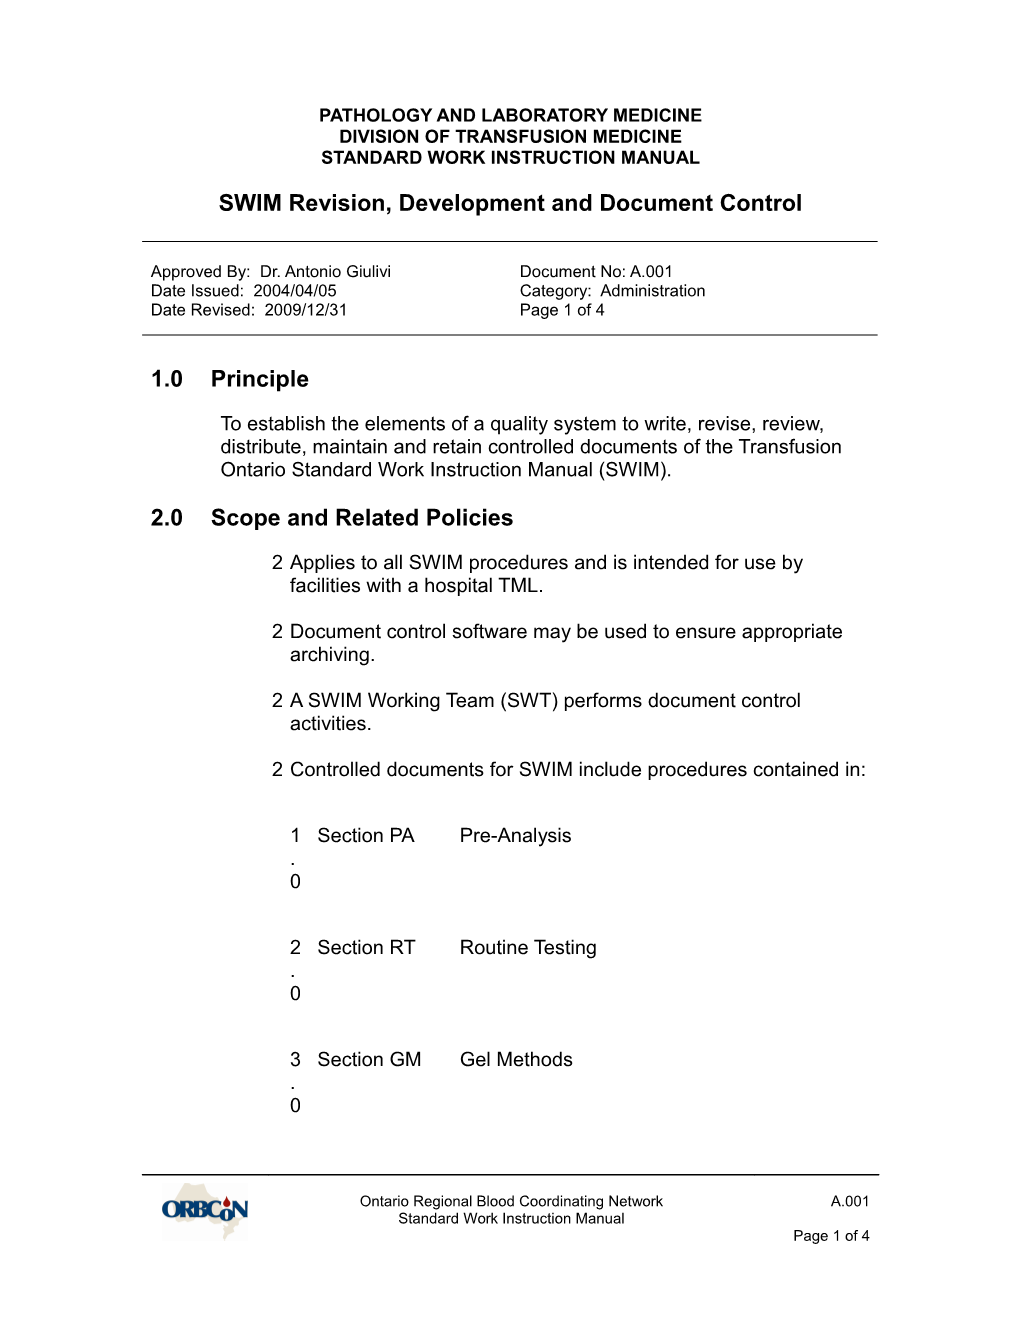 A.001 SWIM Revision - Document Control